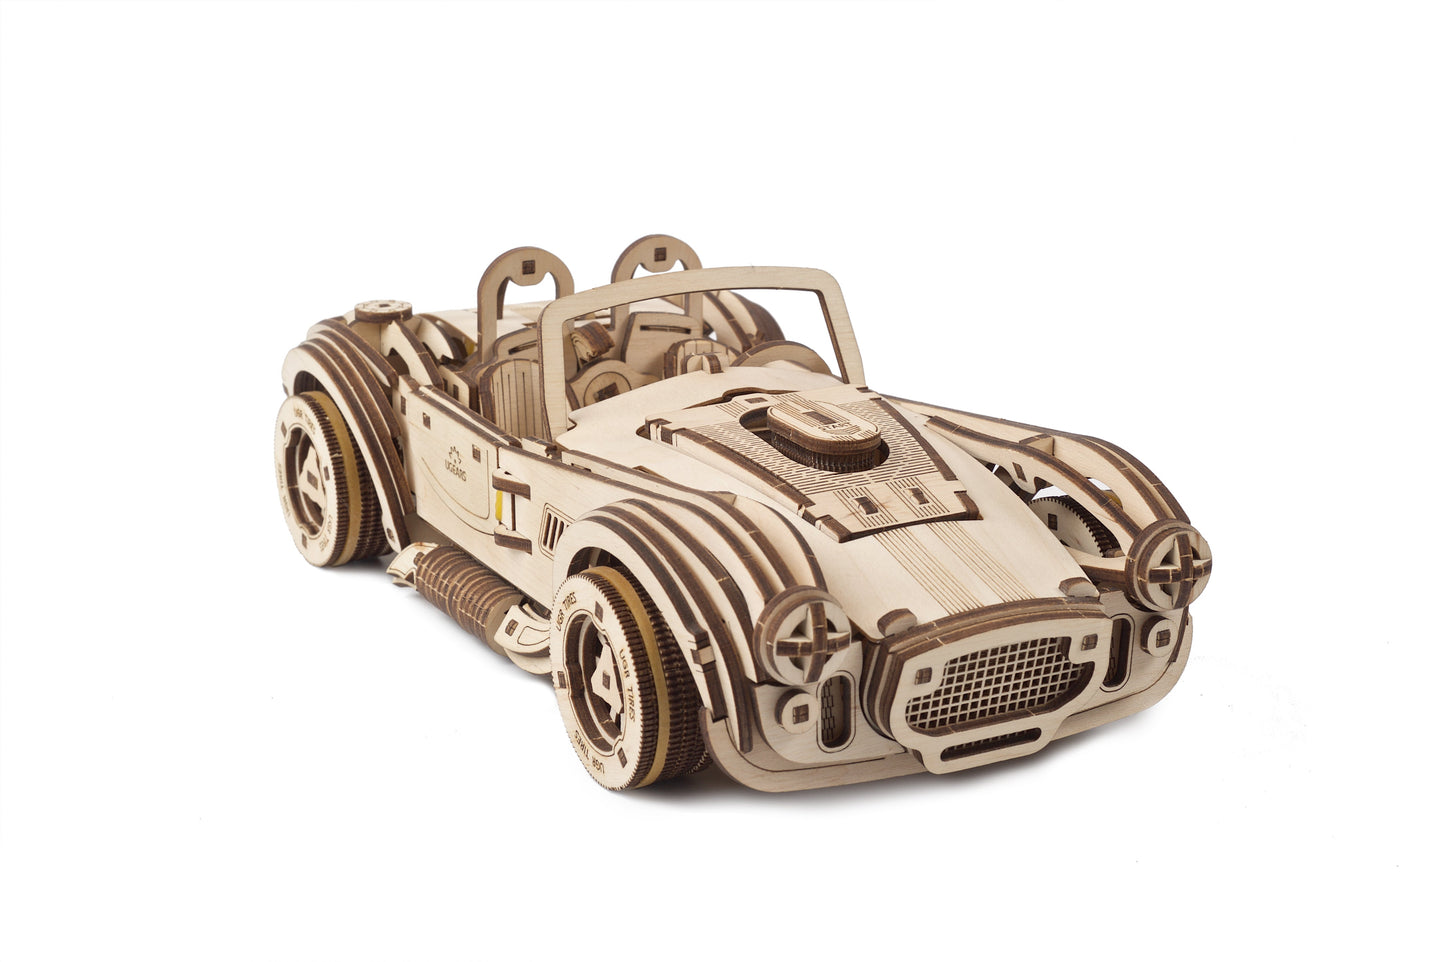 Ugears Drift Cobra Racing Car ★Mechanical 3D Puzzle Kit Model Toys Gift Present Birthday Xmas Christmas Kids Adults